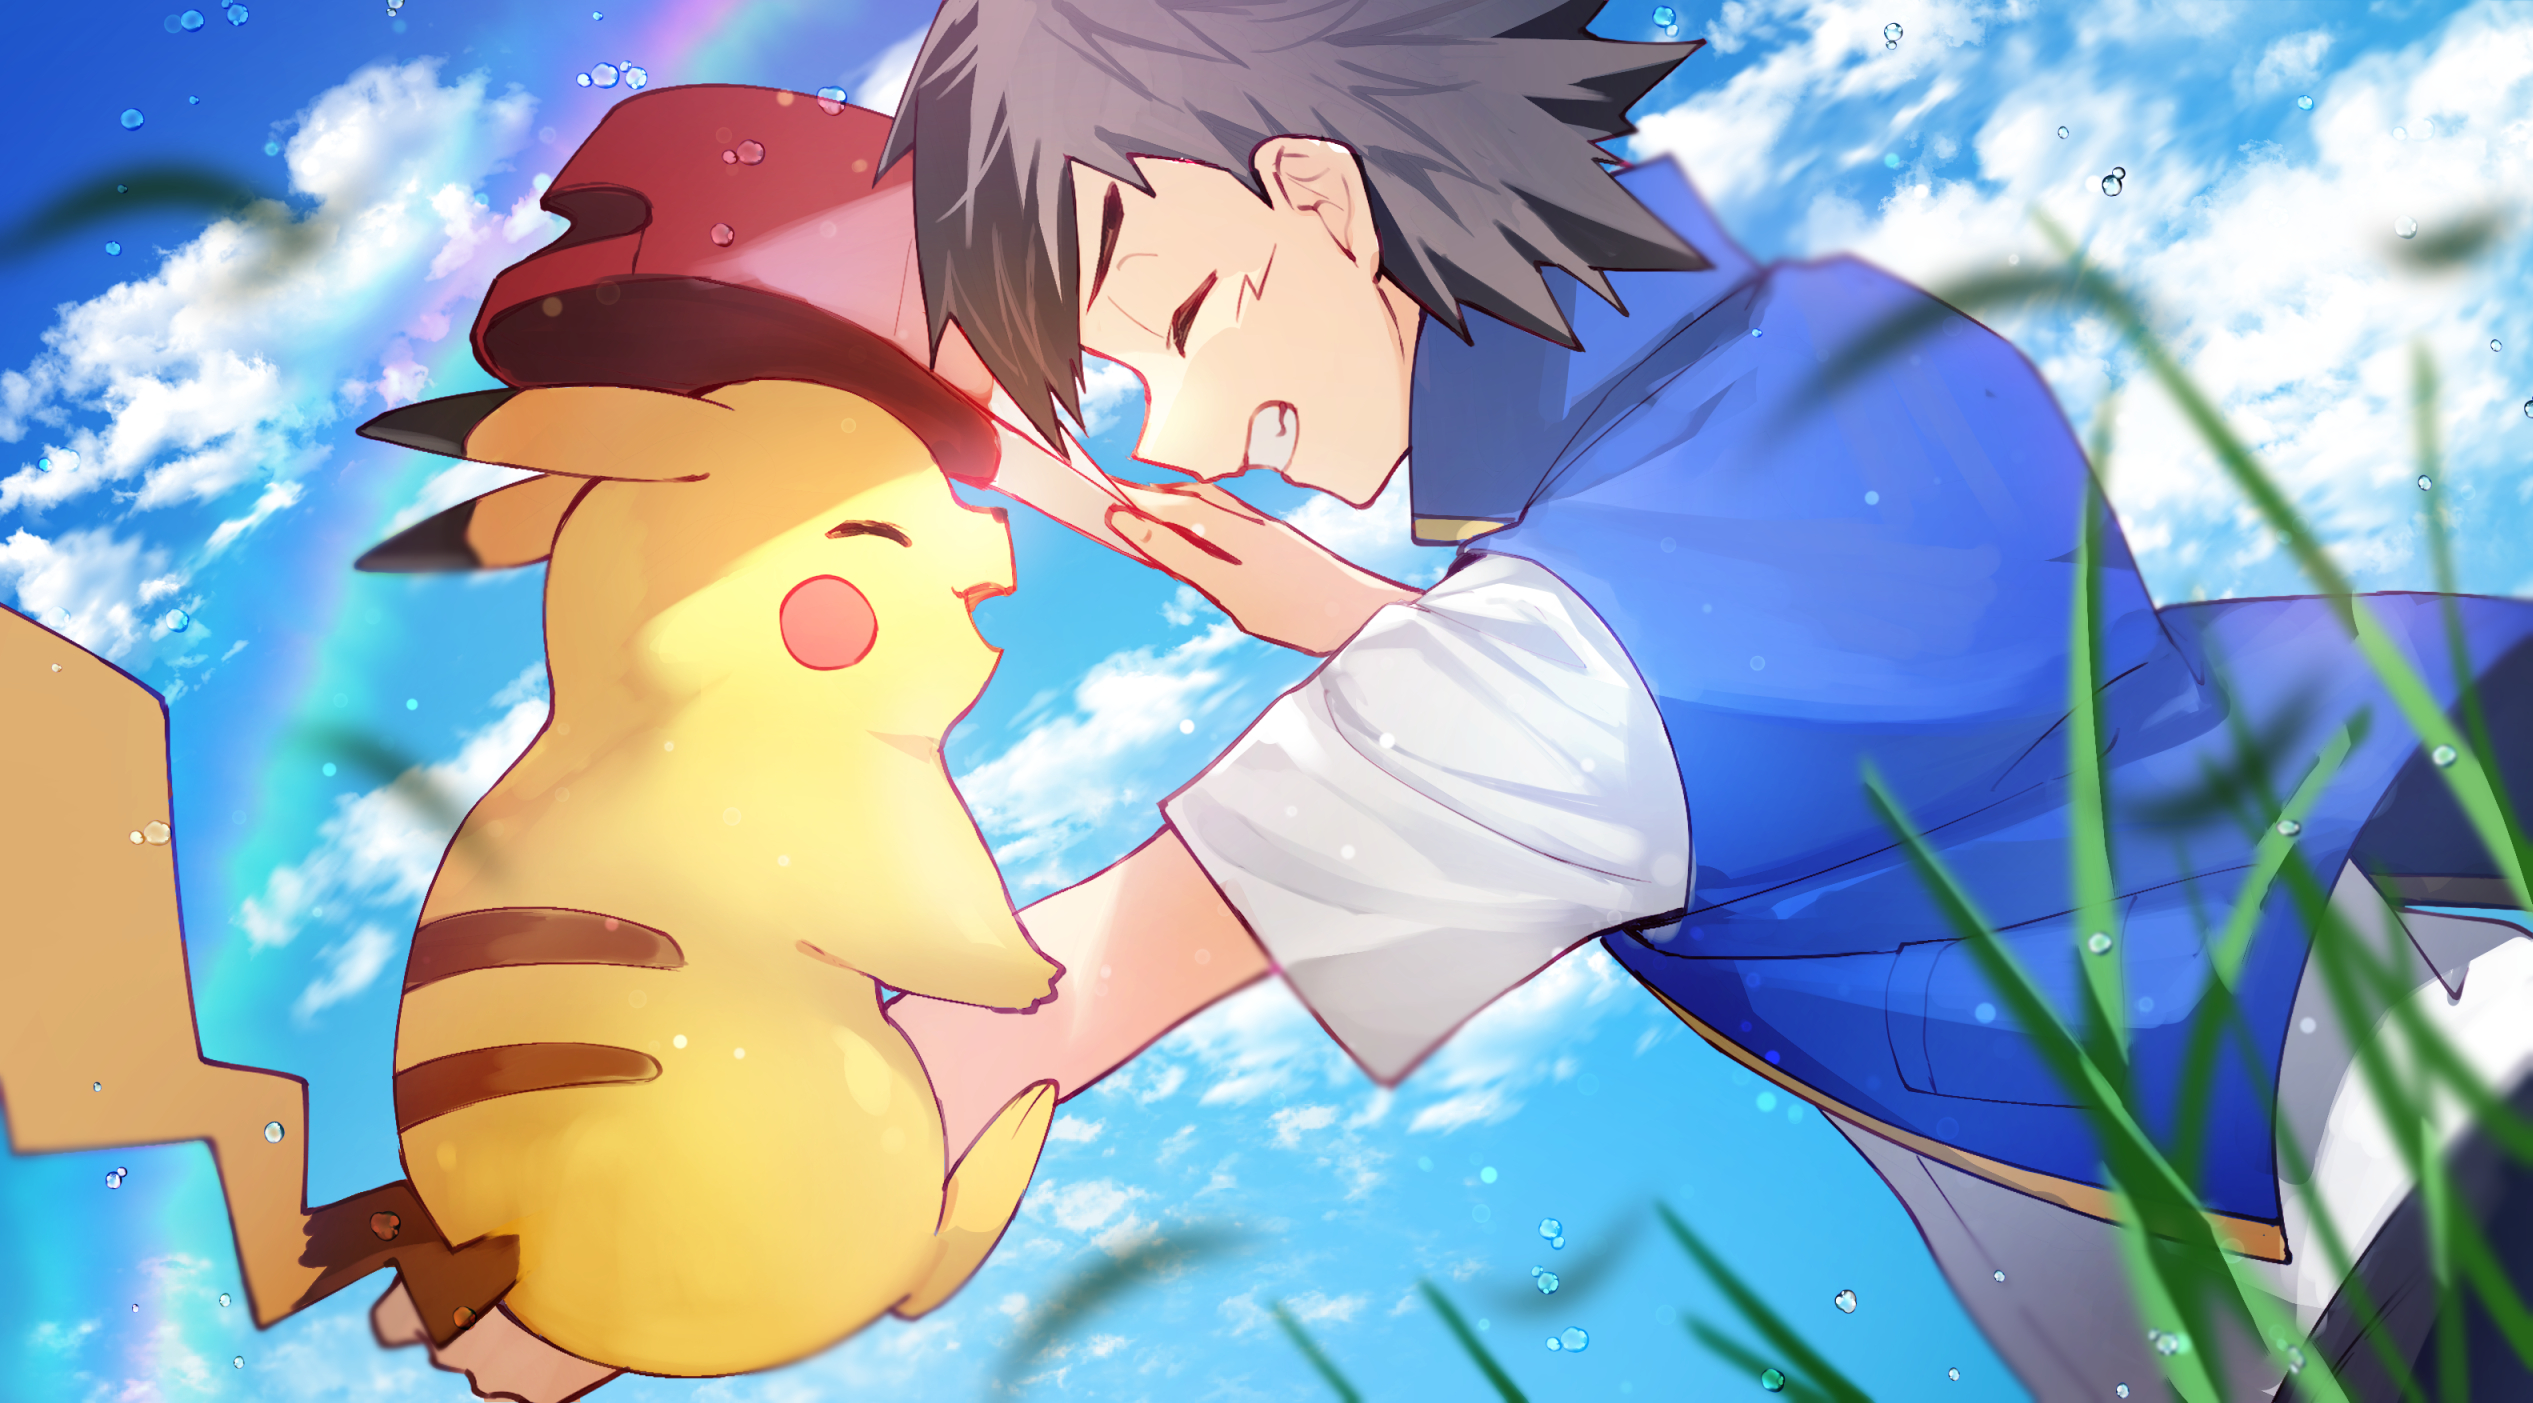 Wallpaper ID 371611  Anime Pokémon Phone Wallpaper Cap Ash Ketchum  1080x2220 free download